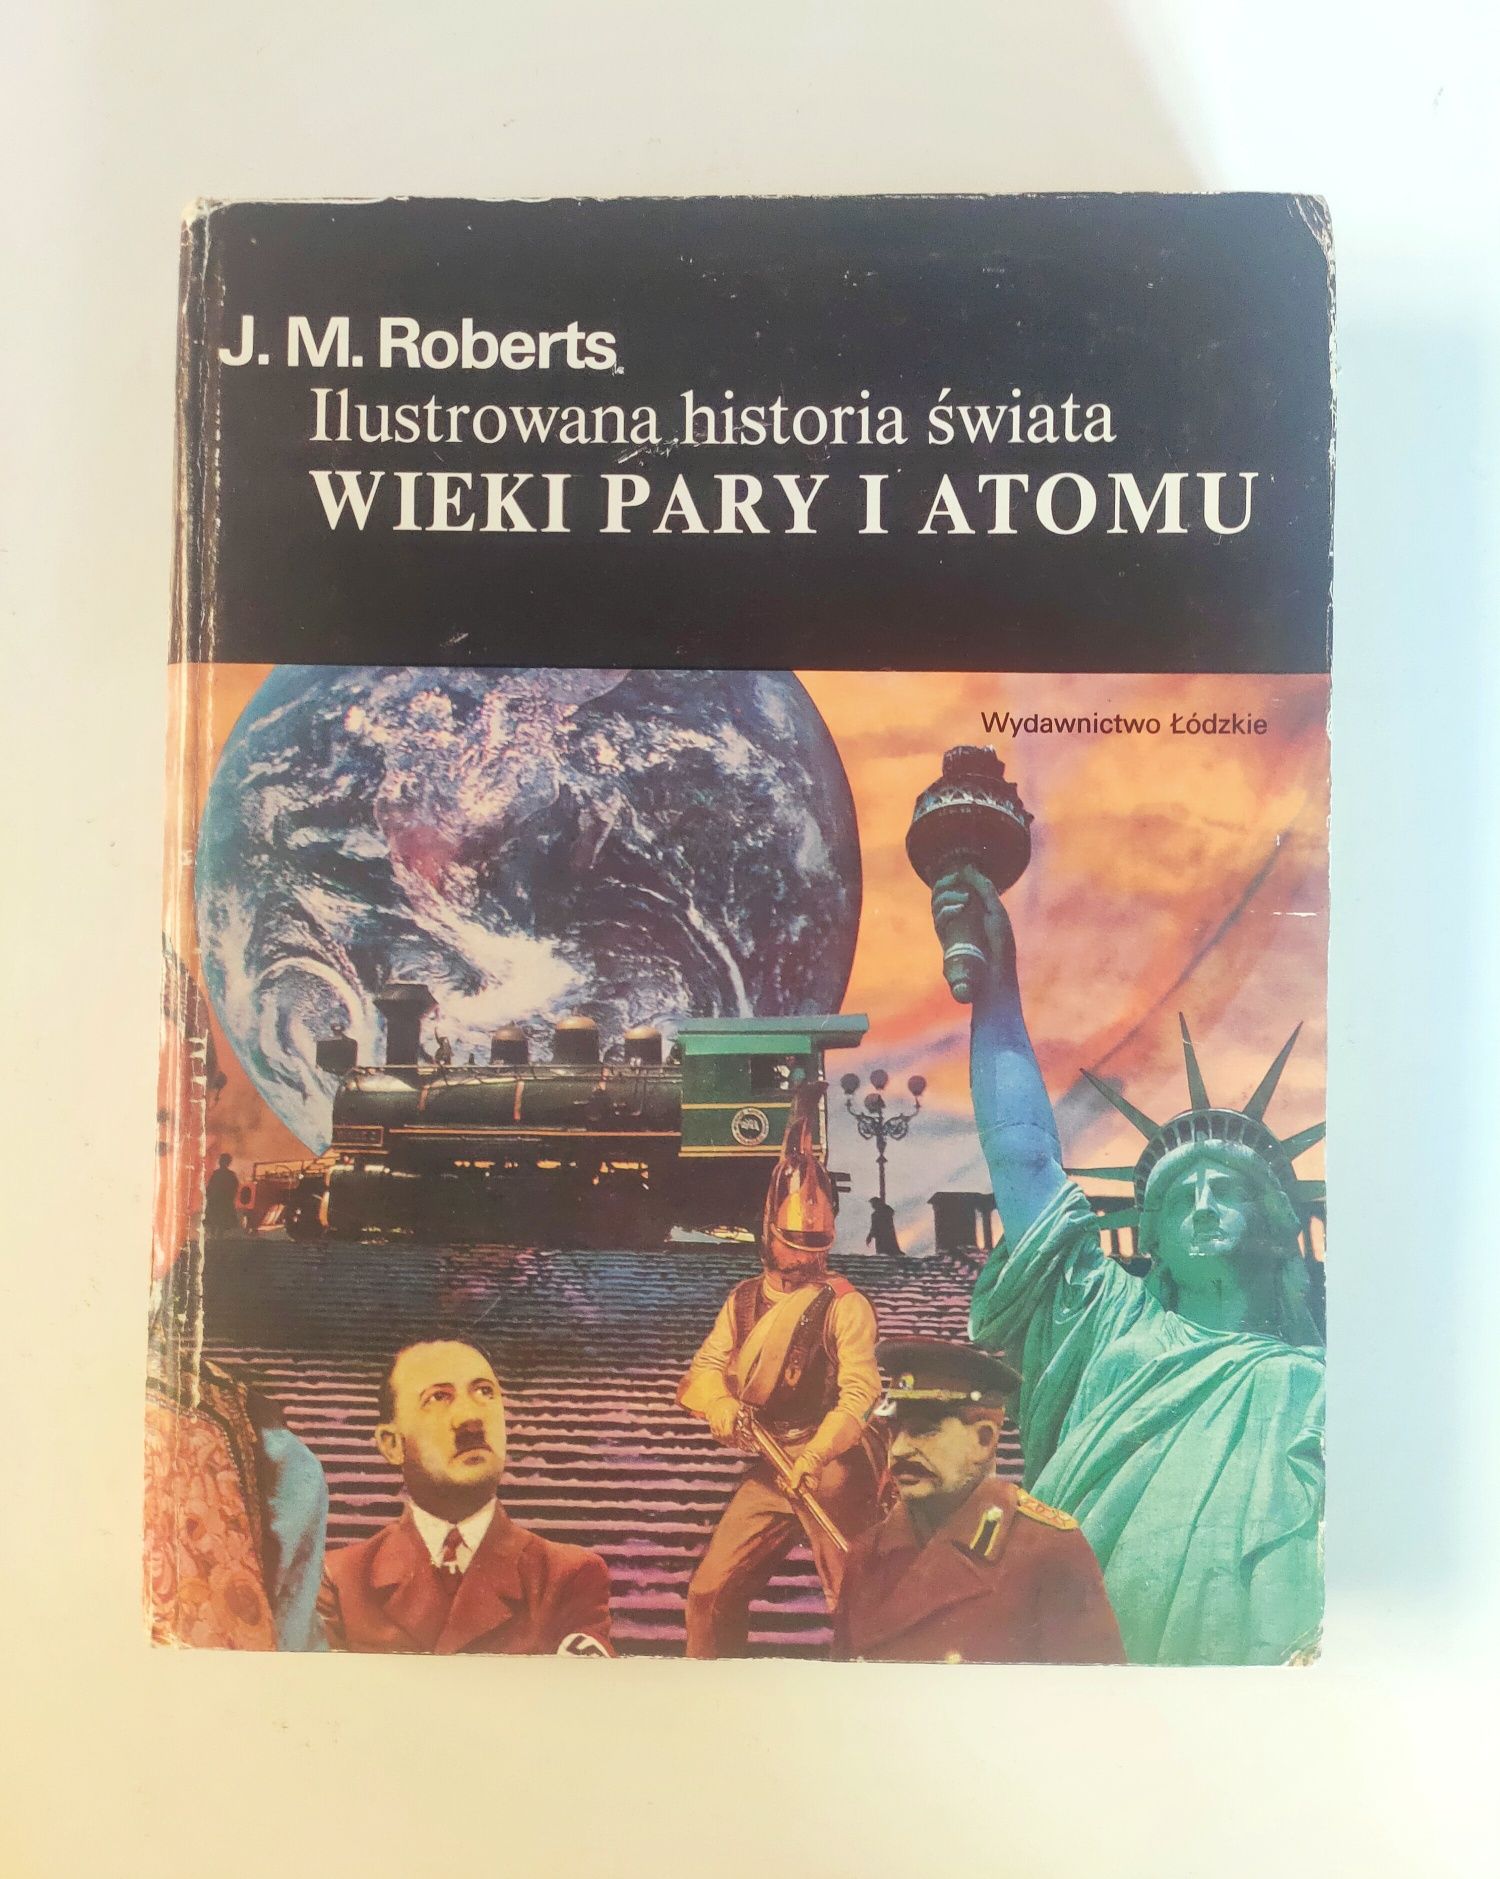 J.M. Roberts "wieki pary i atomu" wielka księga